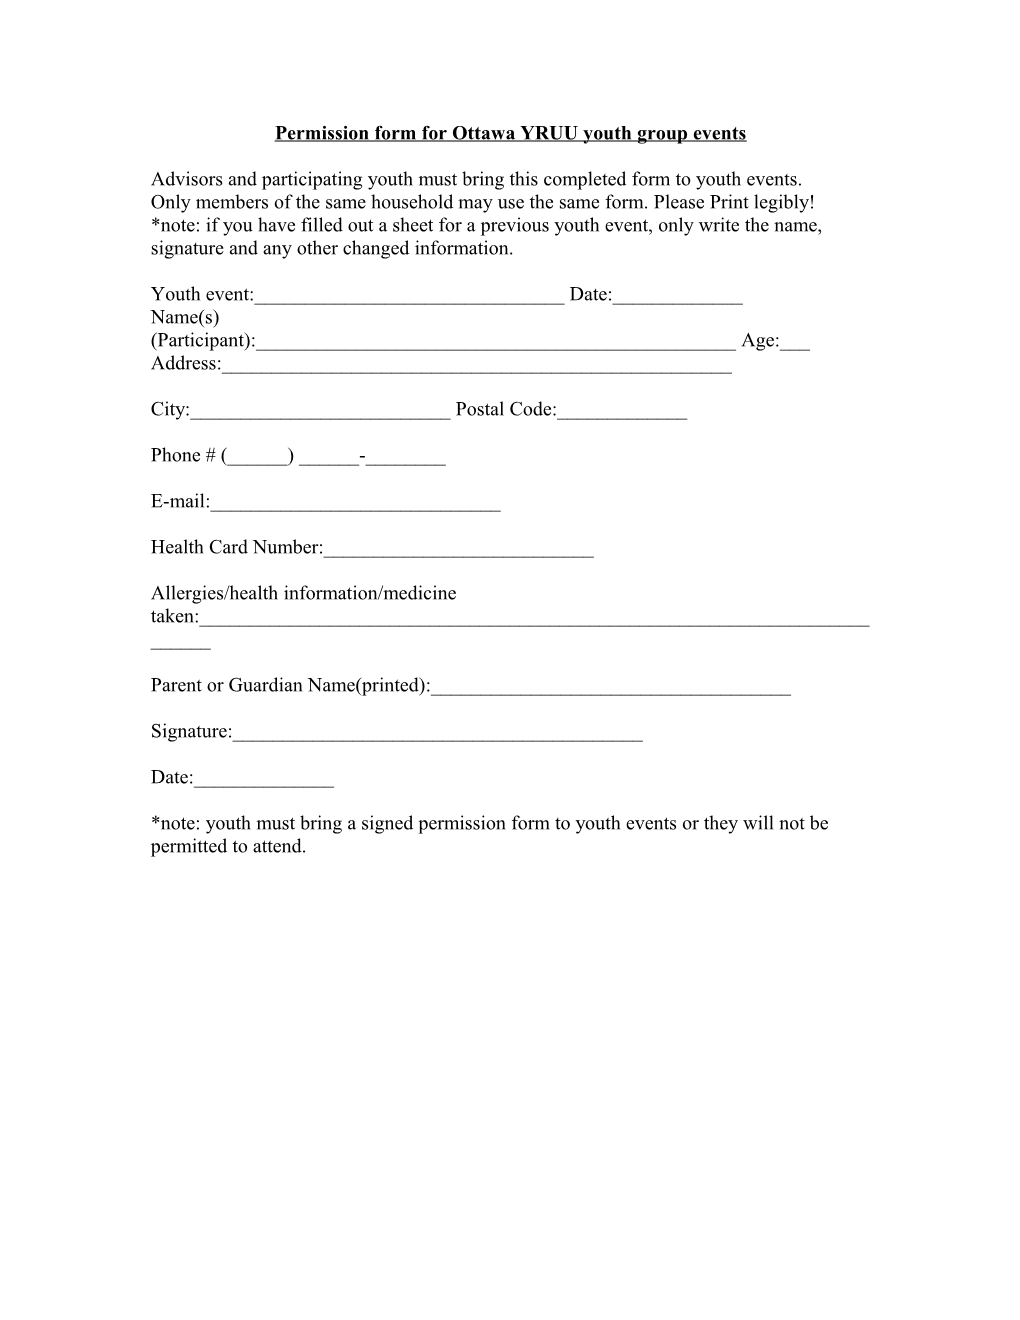 Permission Form for Ottawa YRUU Youth Group Events